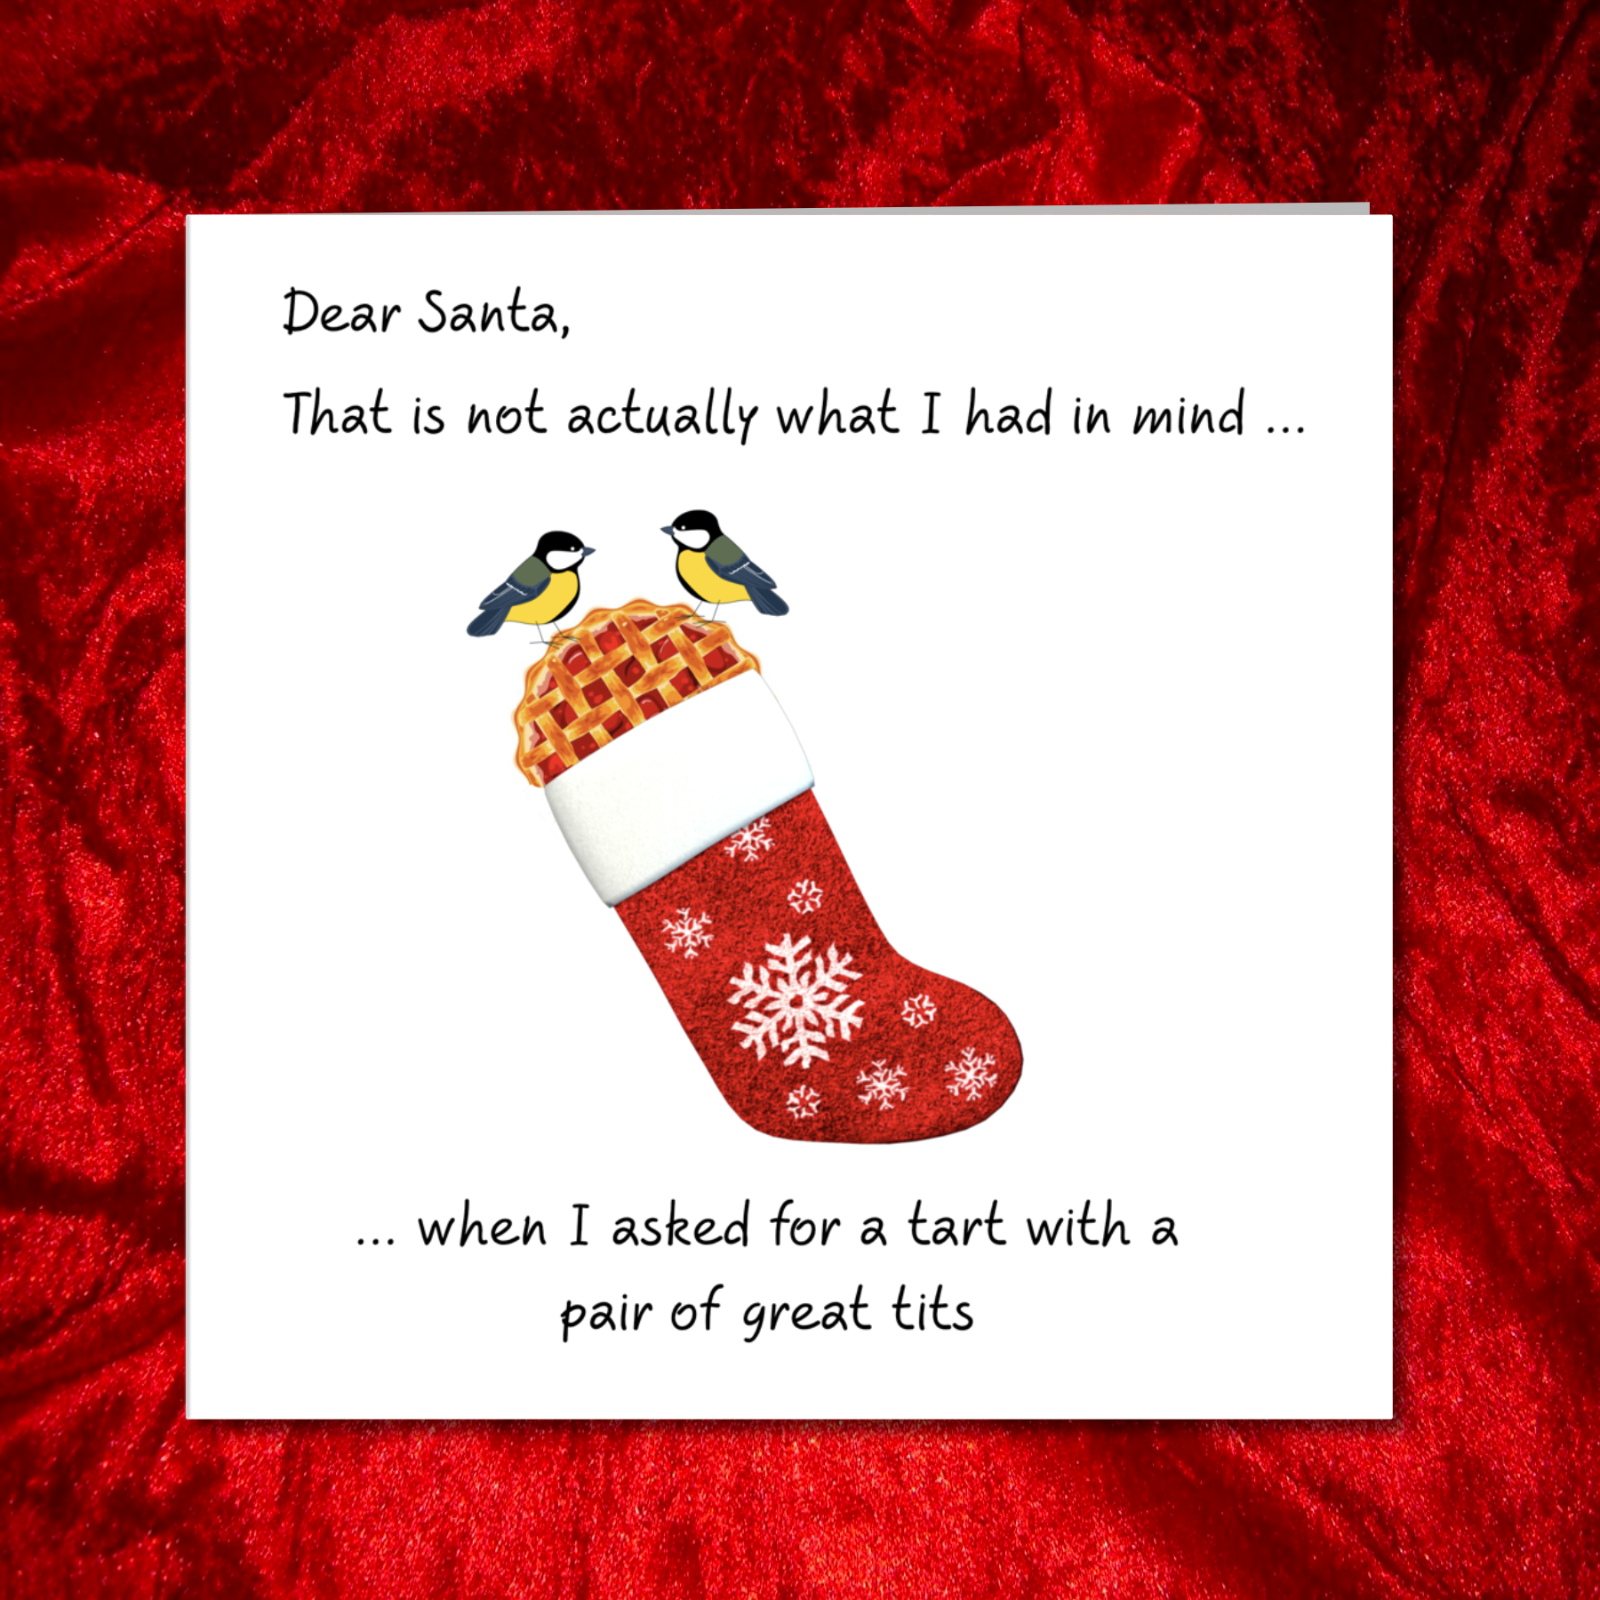 Naughty Funny Christmas Card Rude Adult Humorous Tart Great Tits Joke Cartoon